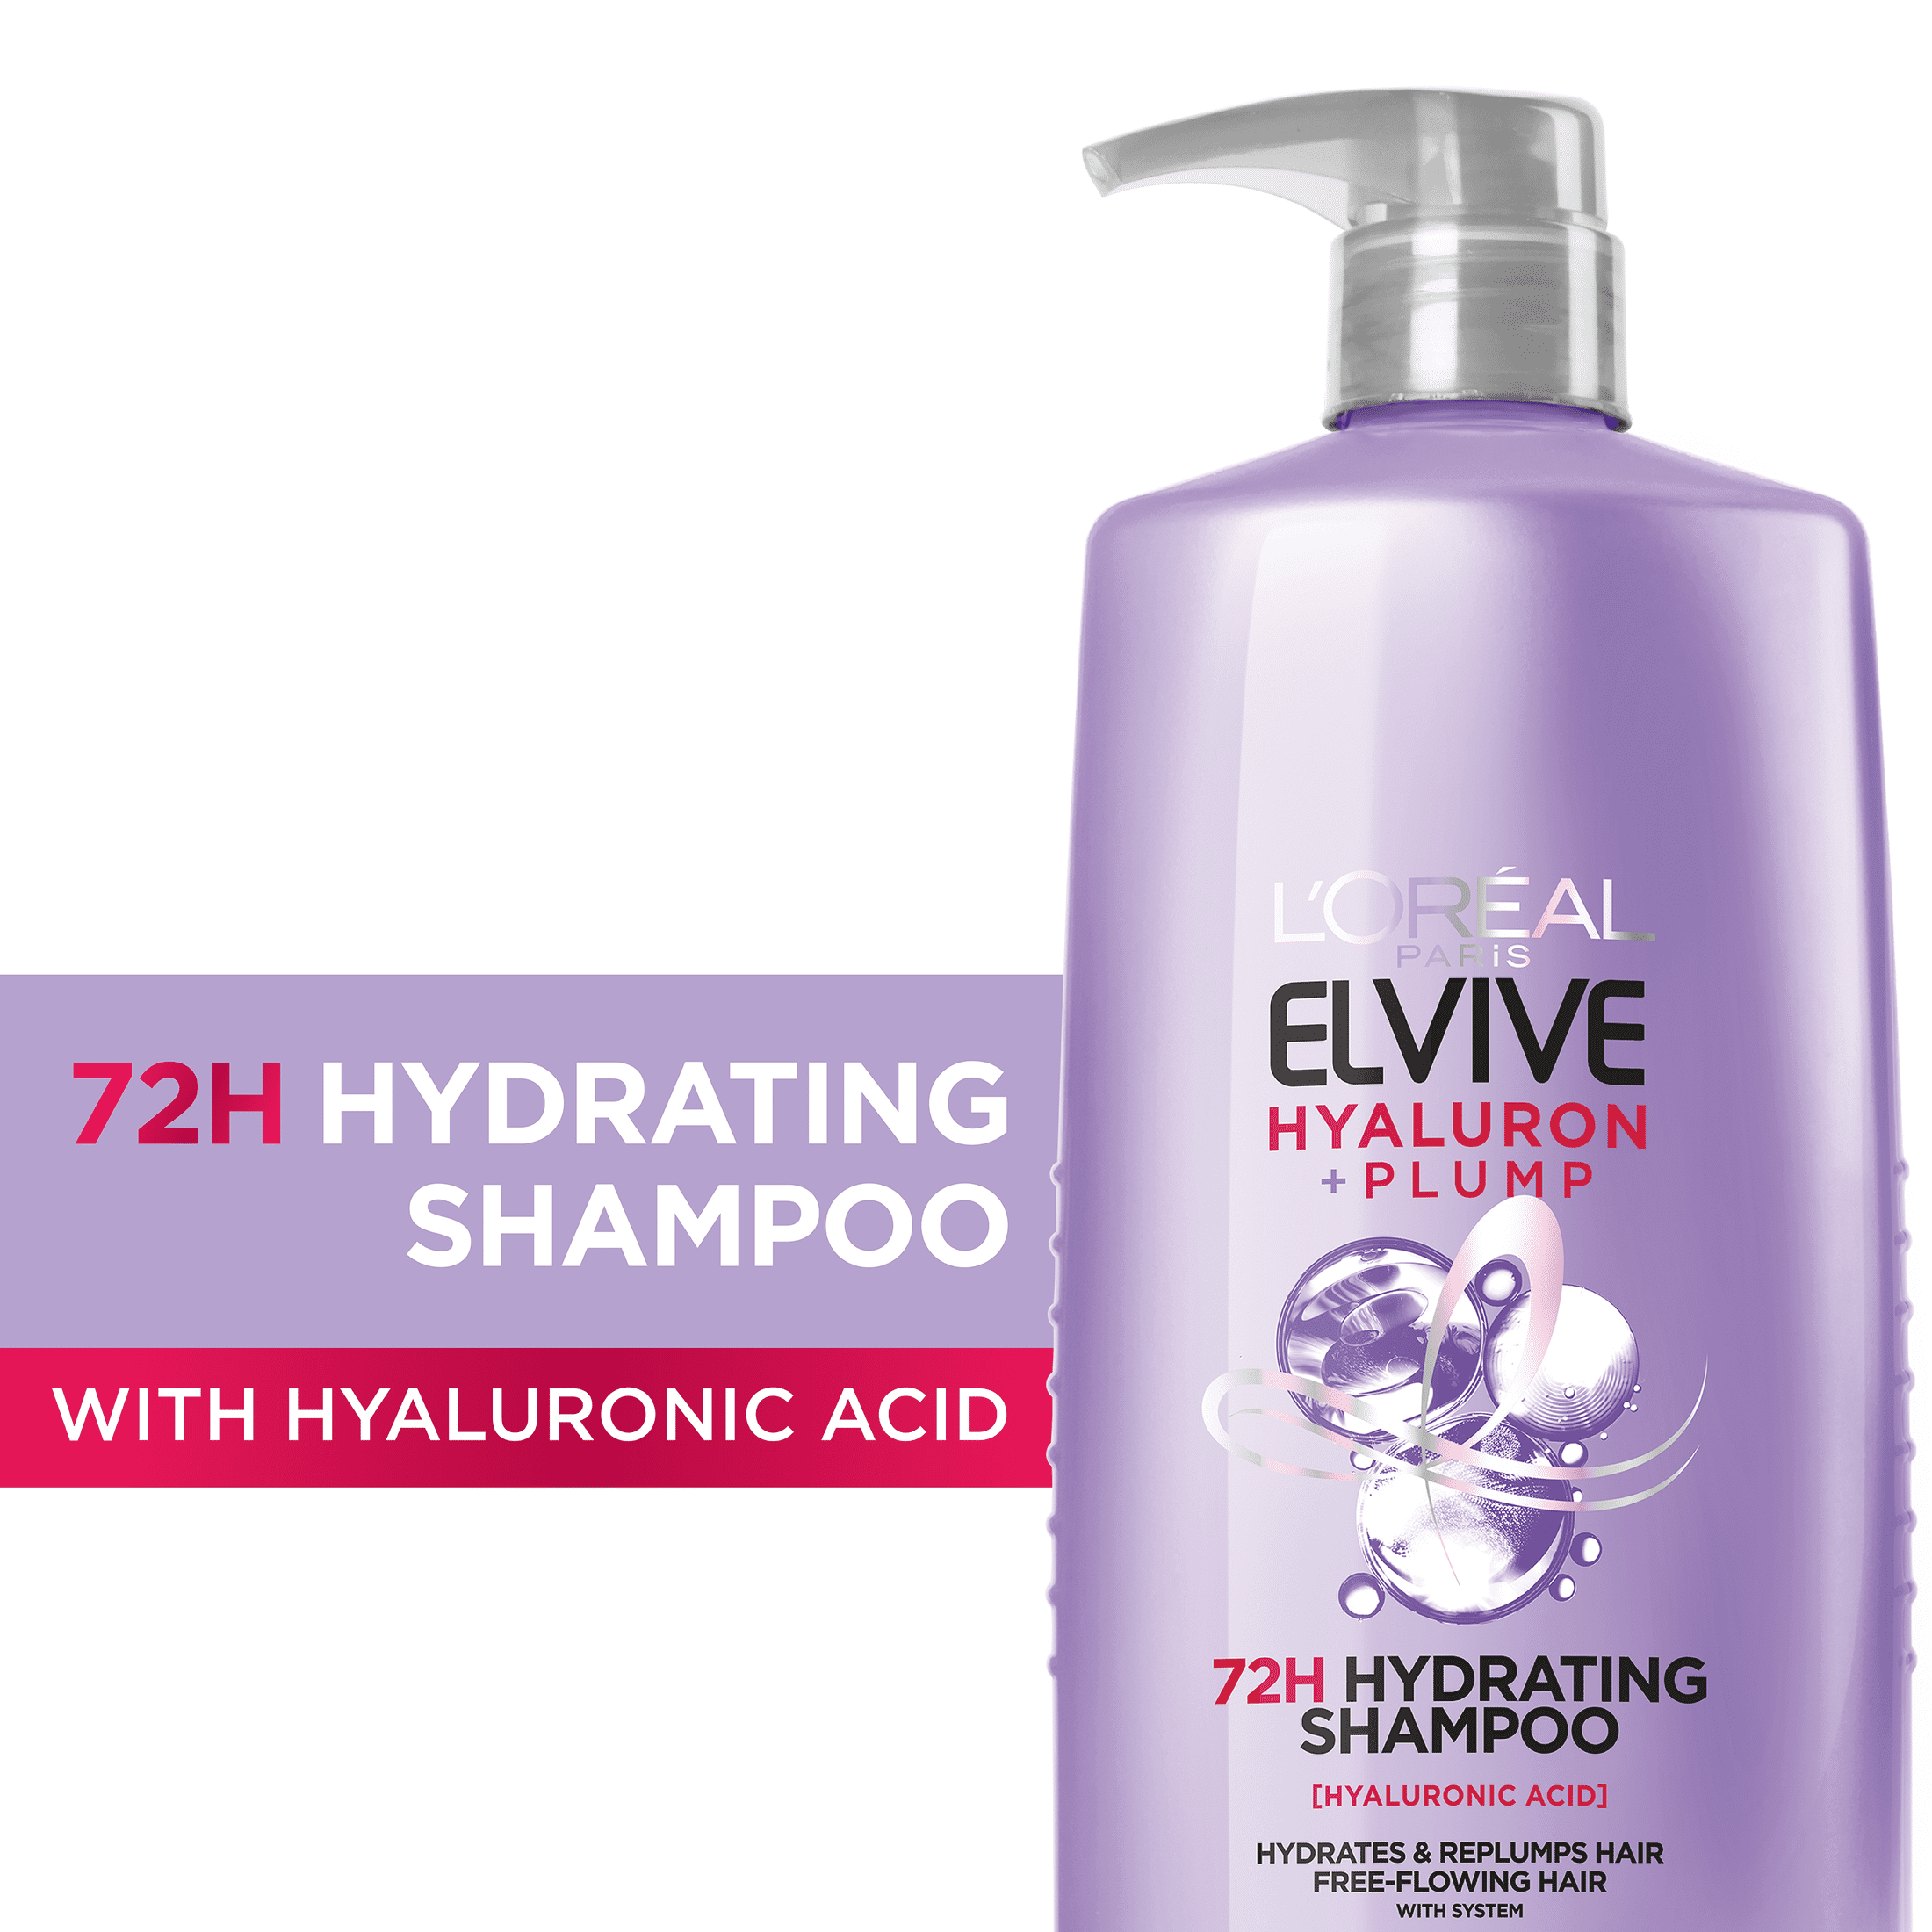 L'Oreal ElVive Hidra (Hialuronico) Shampoo+Acondicionador 680ML(c/u)